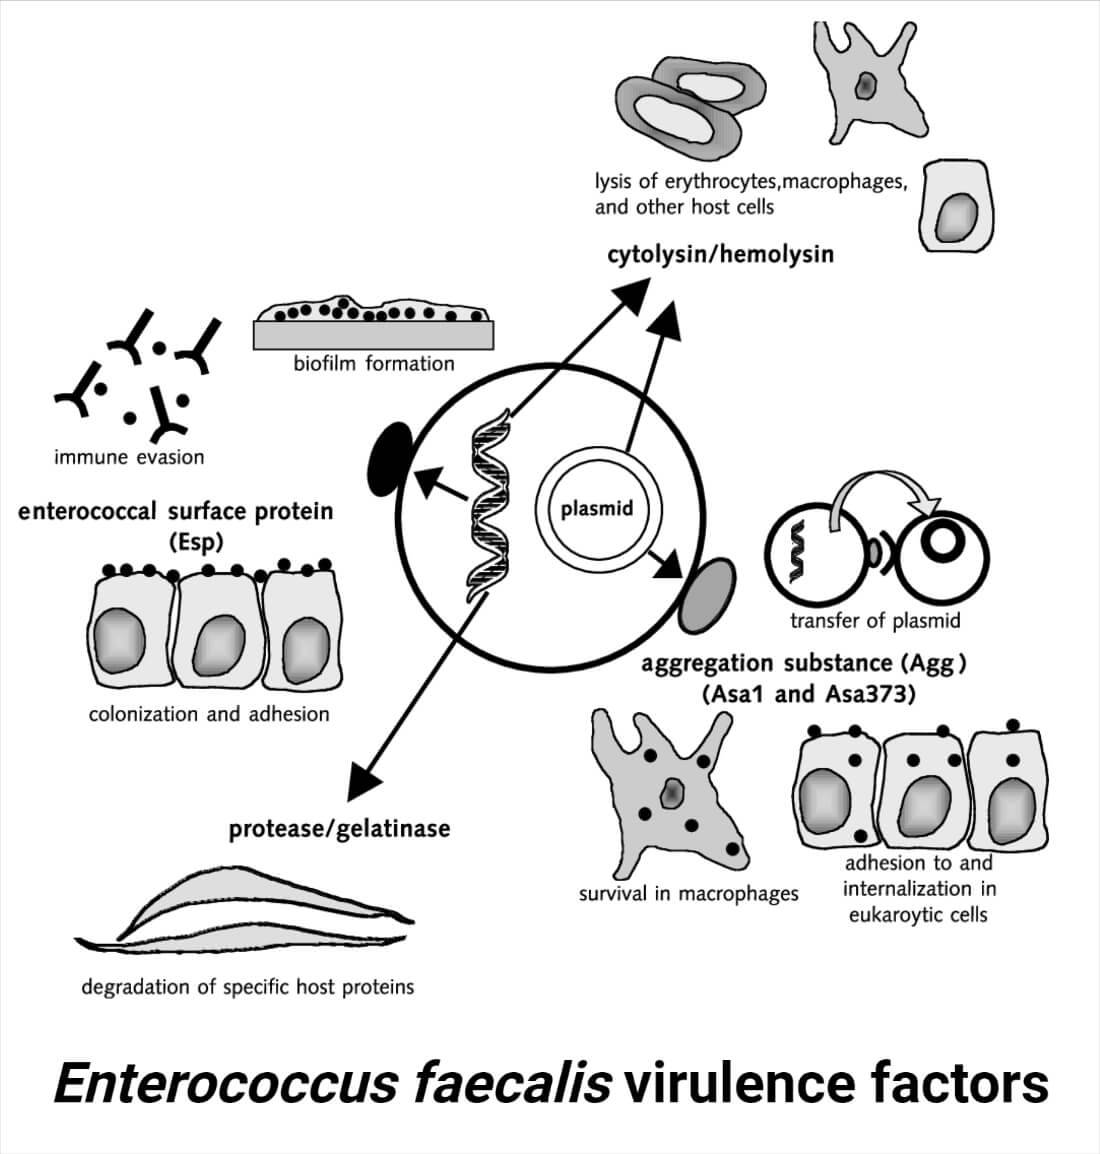 Virulence factors of Enterococcus faecalis